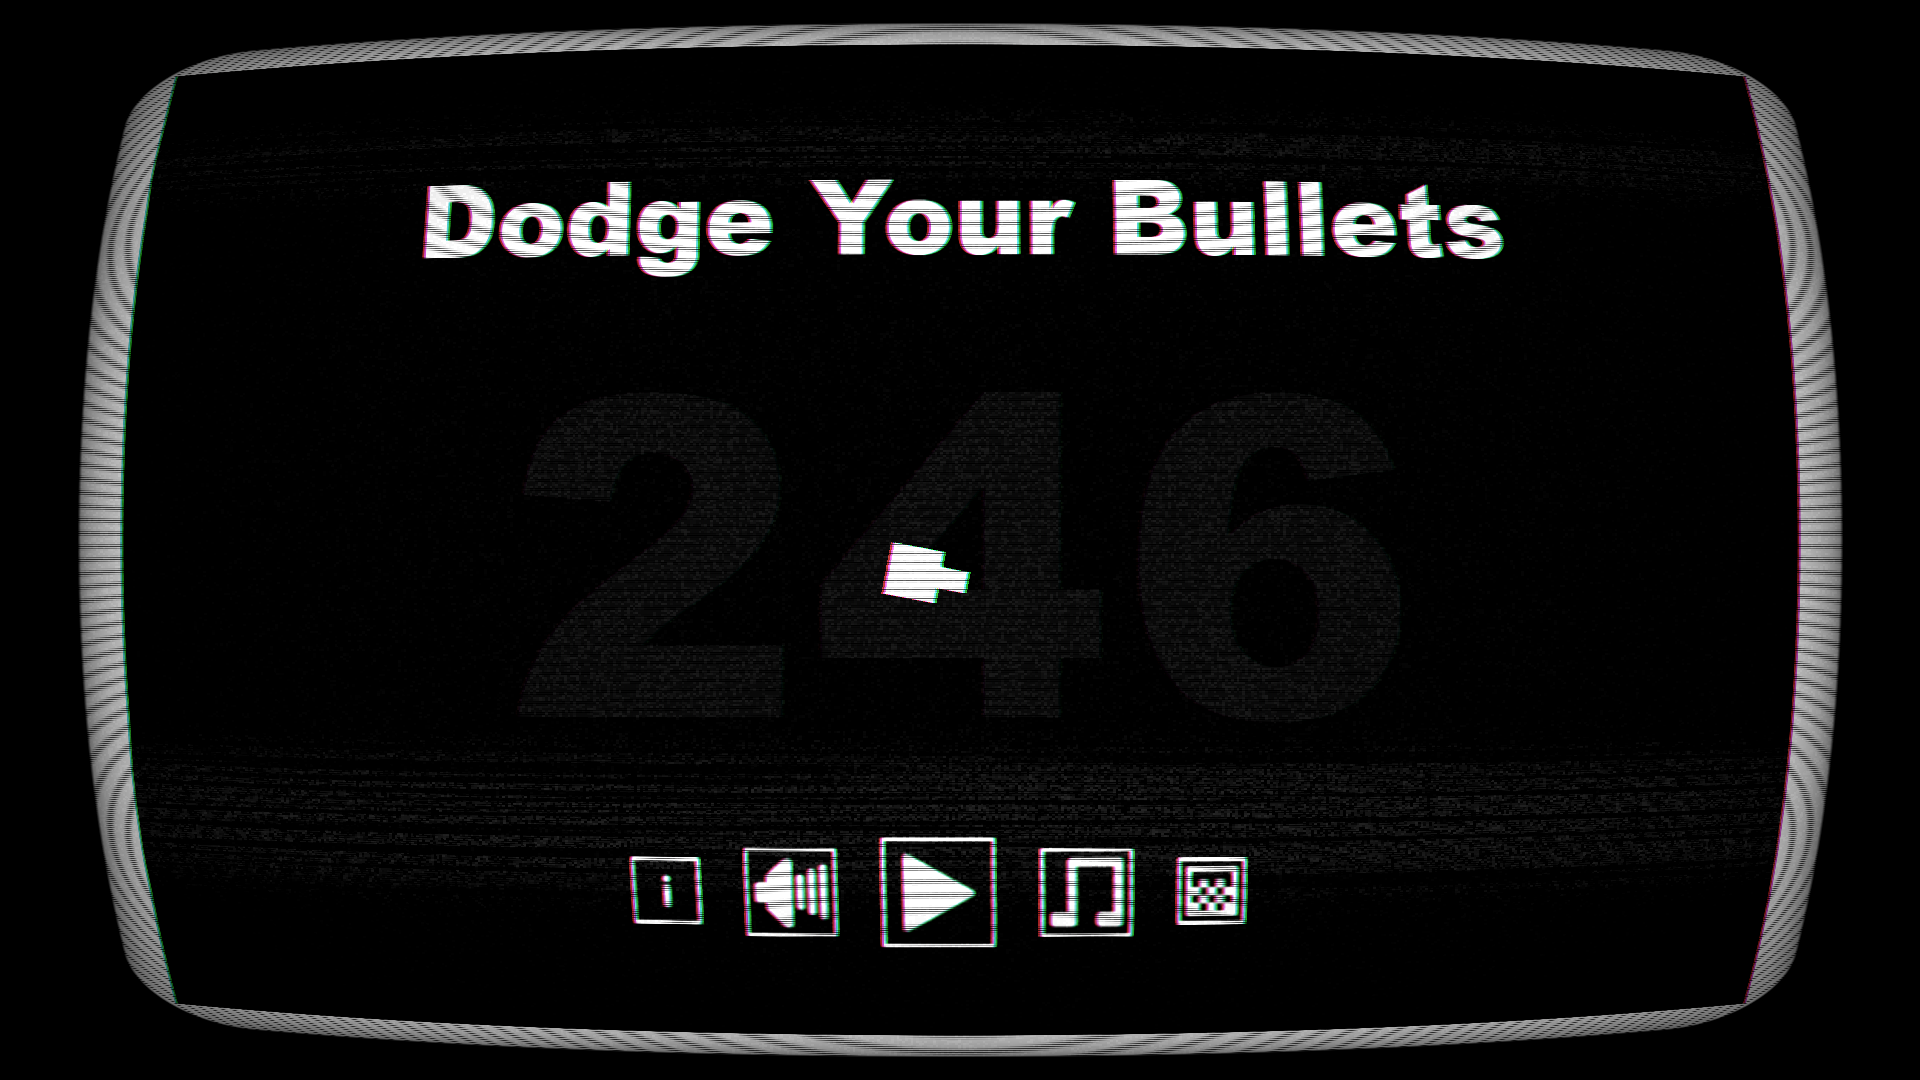 Dodge Your Bullets